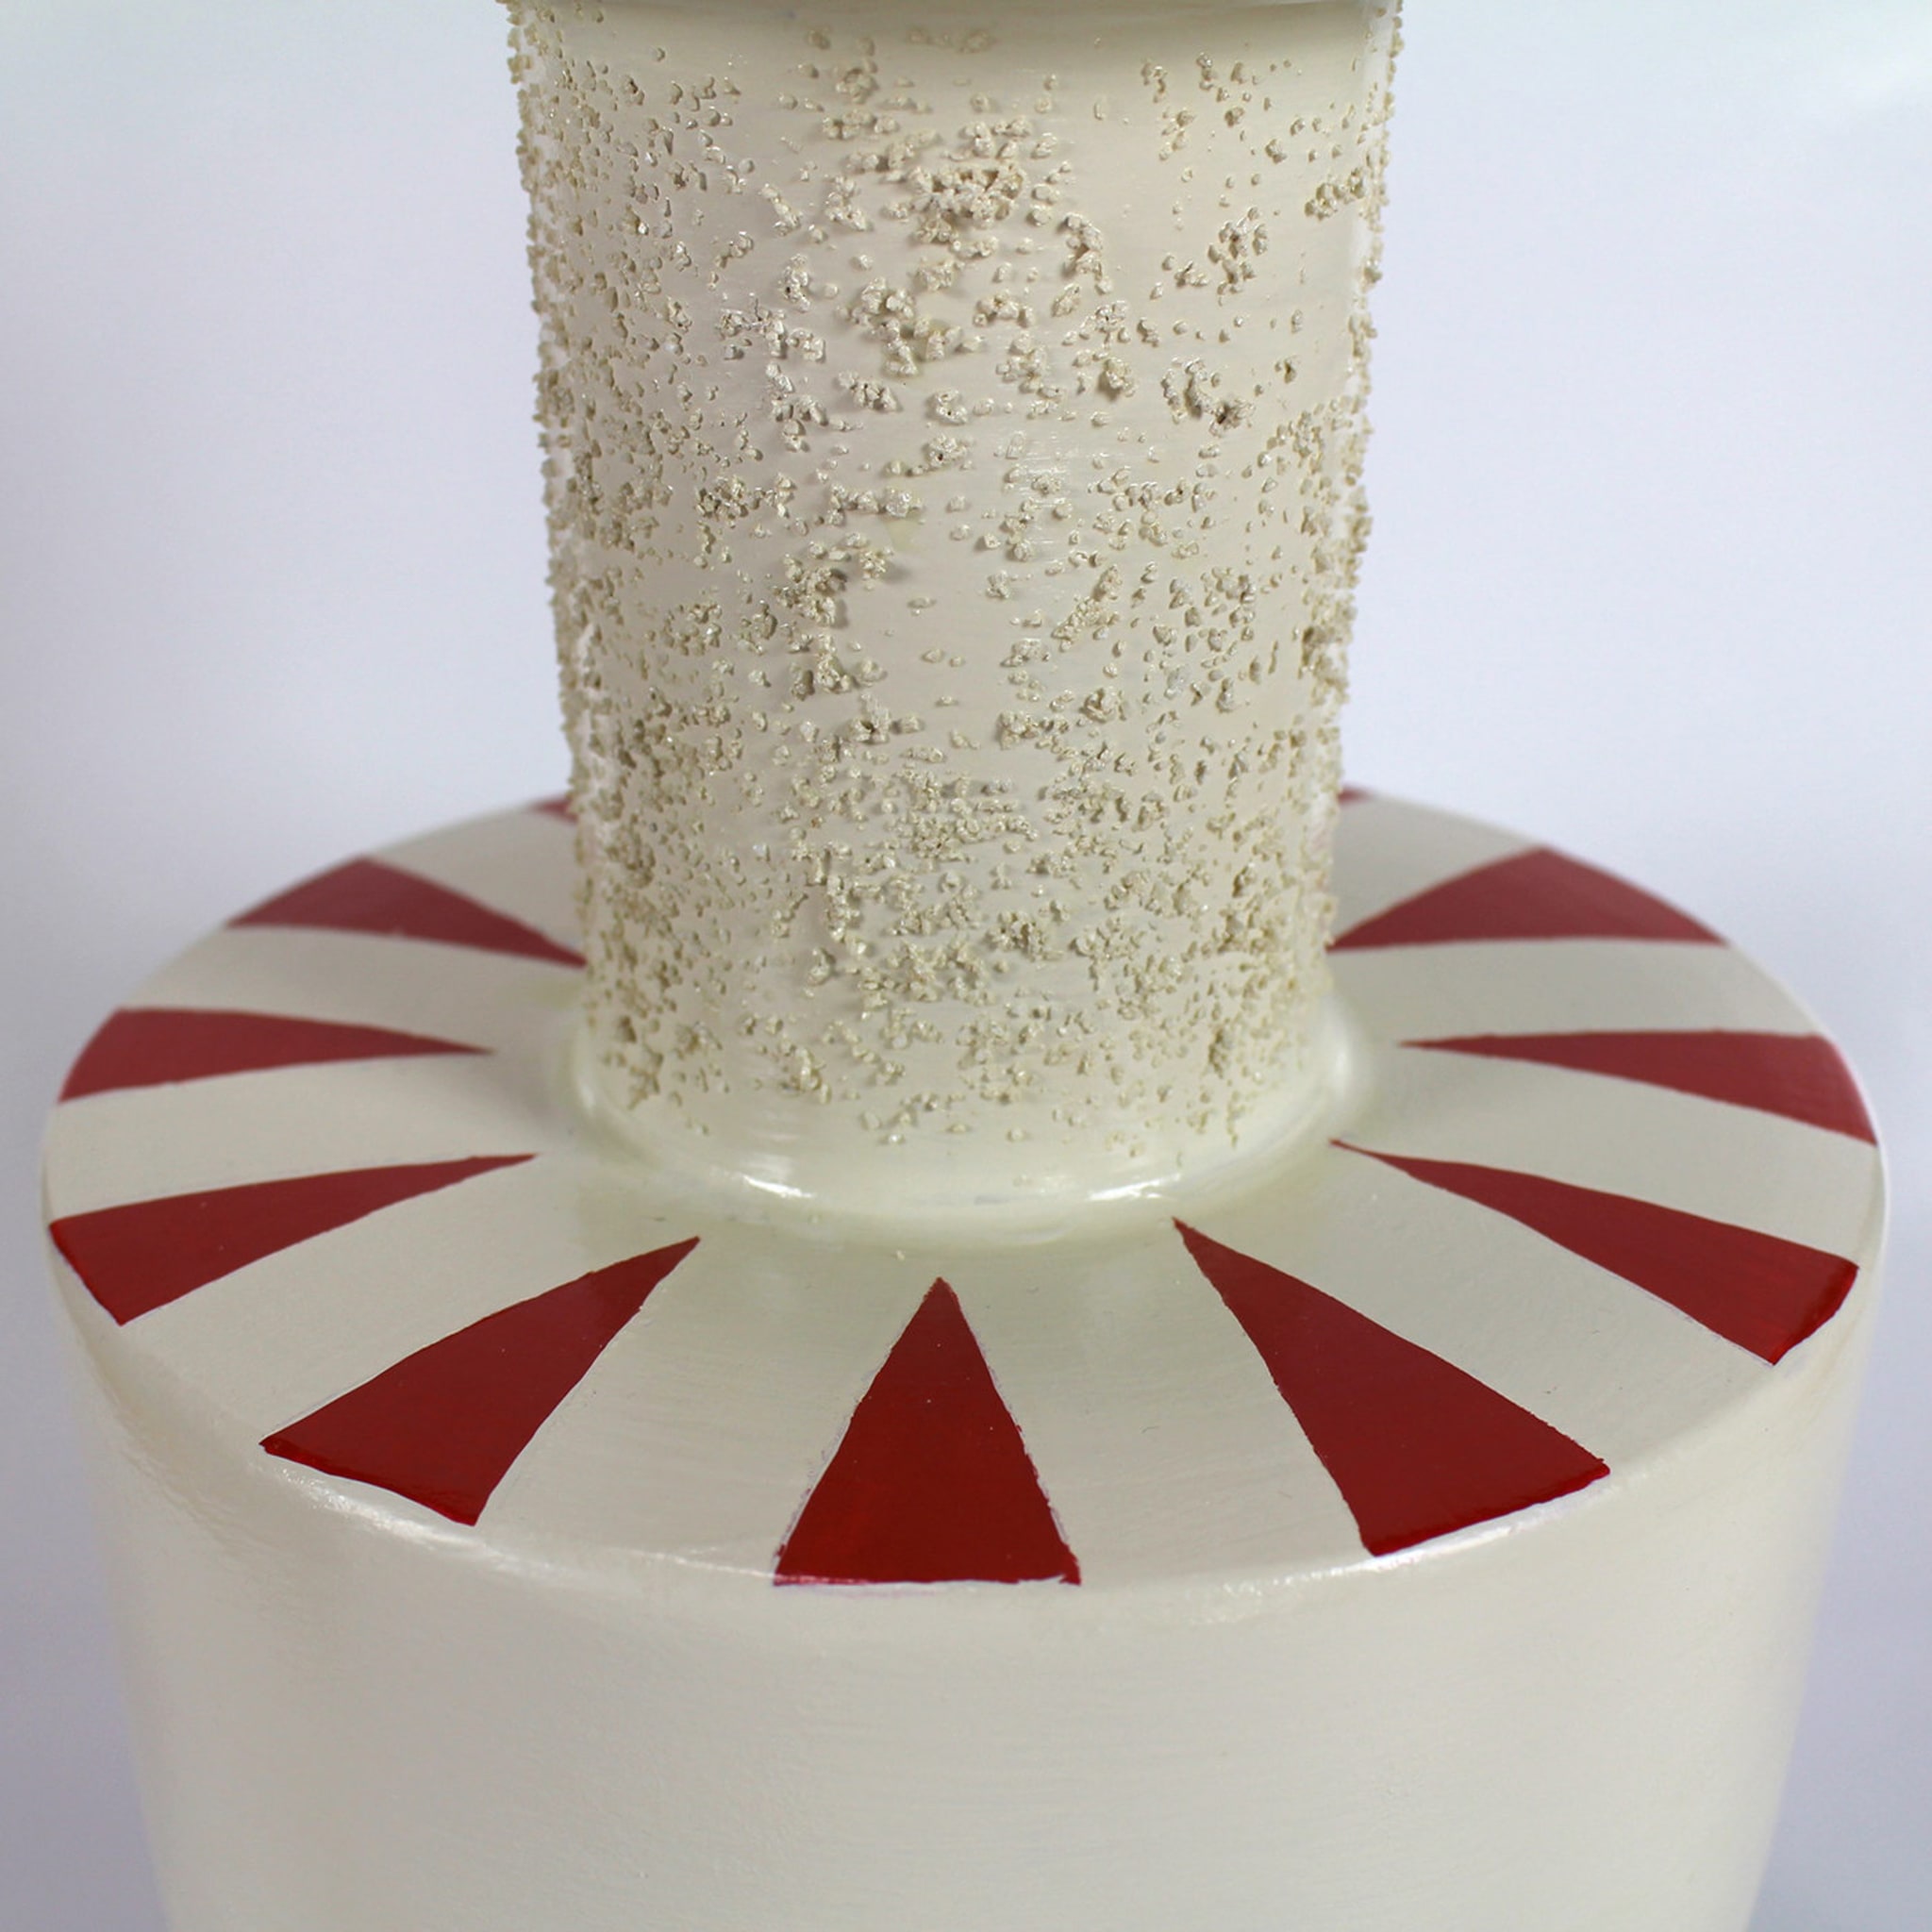 Terracotta Vase 12 by Mascia Meccani - Alternative view 2